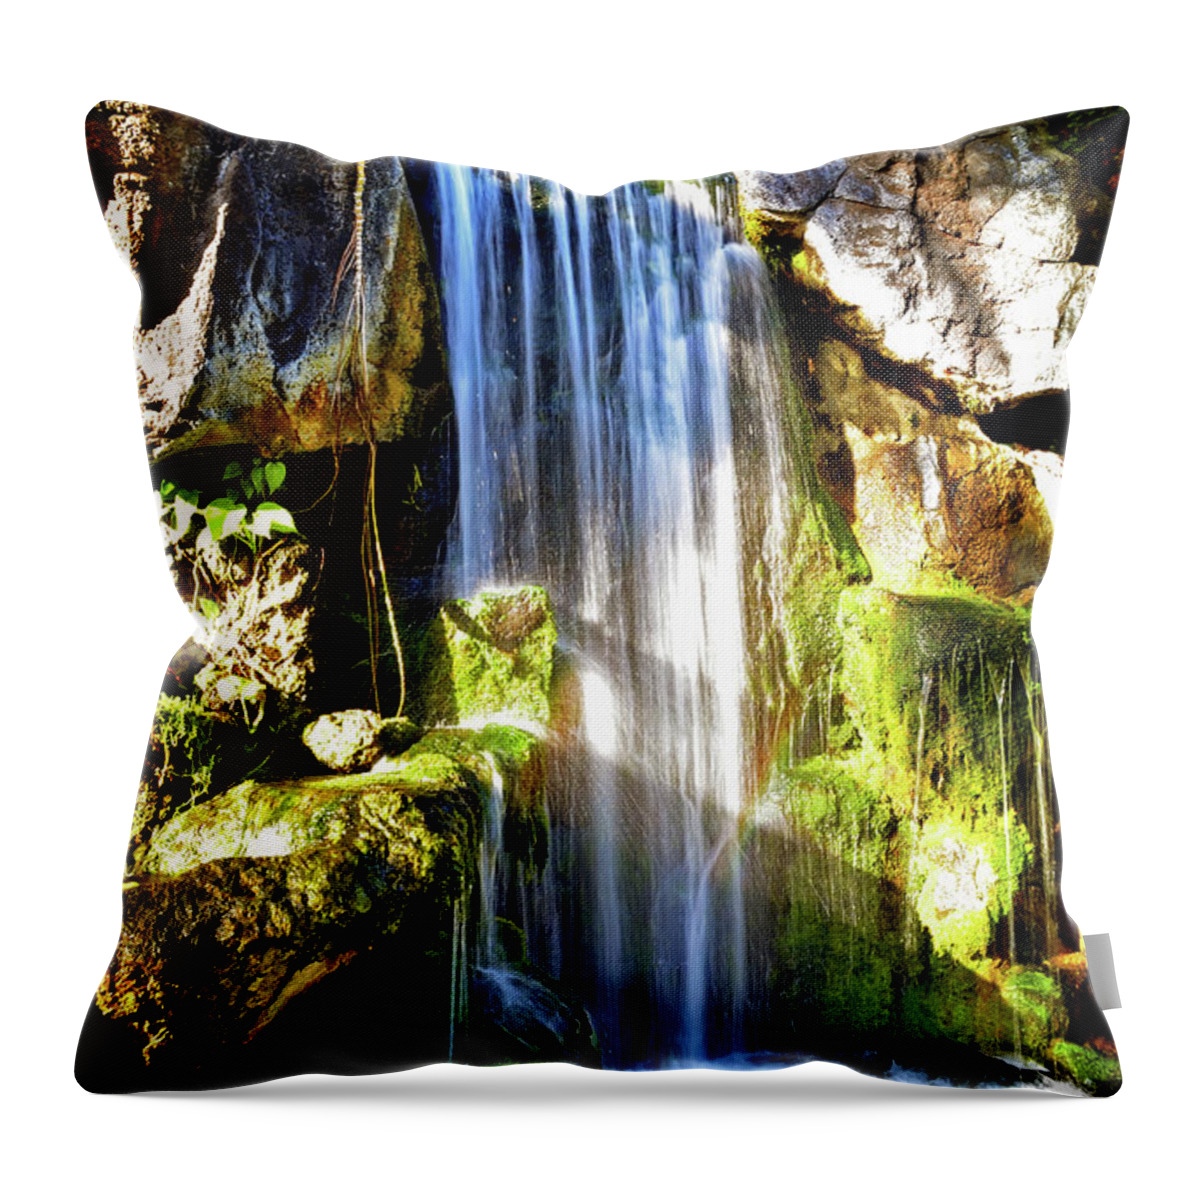 Hawaii Waterfall Throw Pillow featuring the photograph Sunshine Falls by Lisa Lambert-Shank